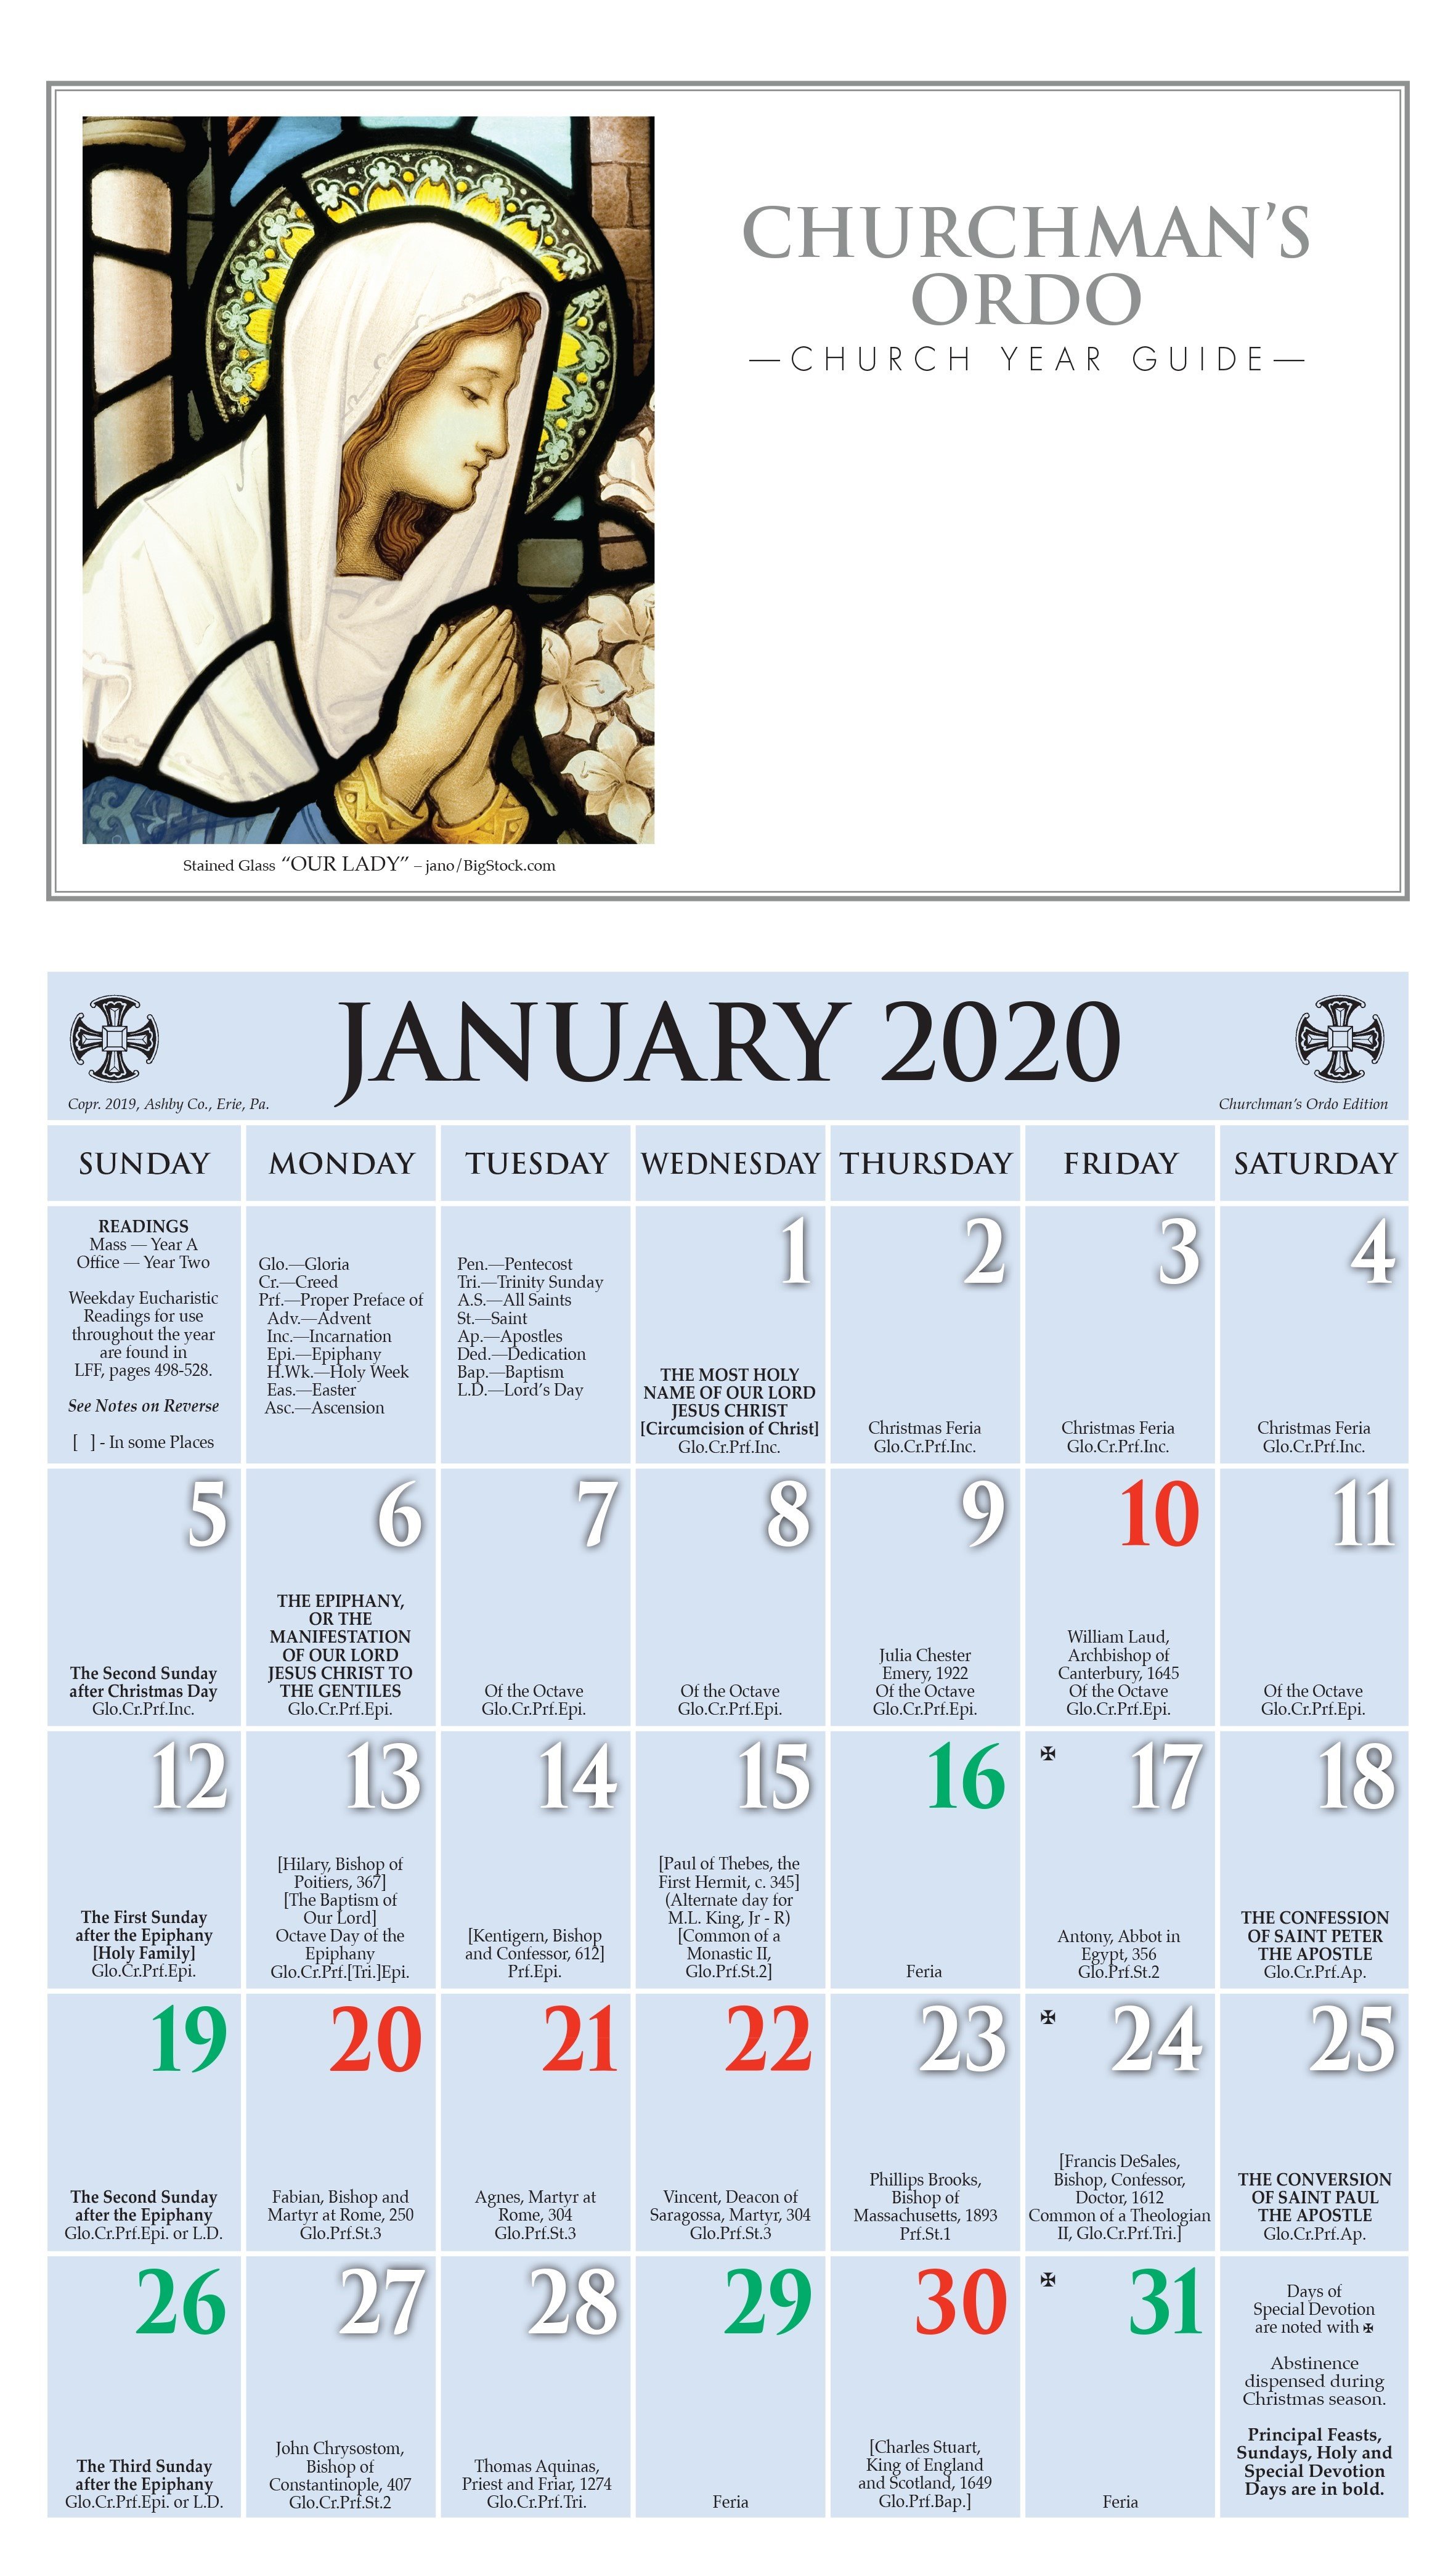 ChurchPublishing.org: Churchman’s Ordo Kalendar 20201182 x 2082